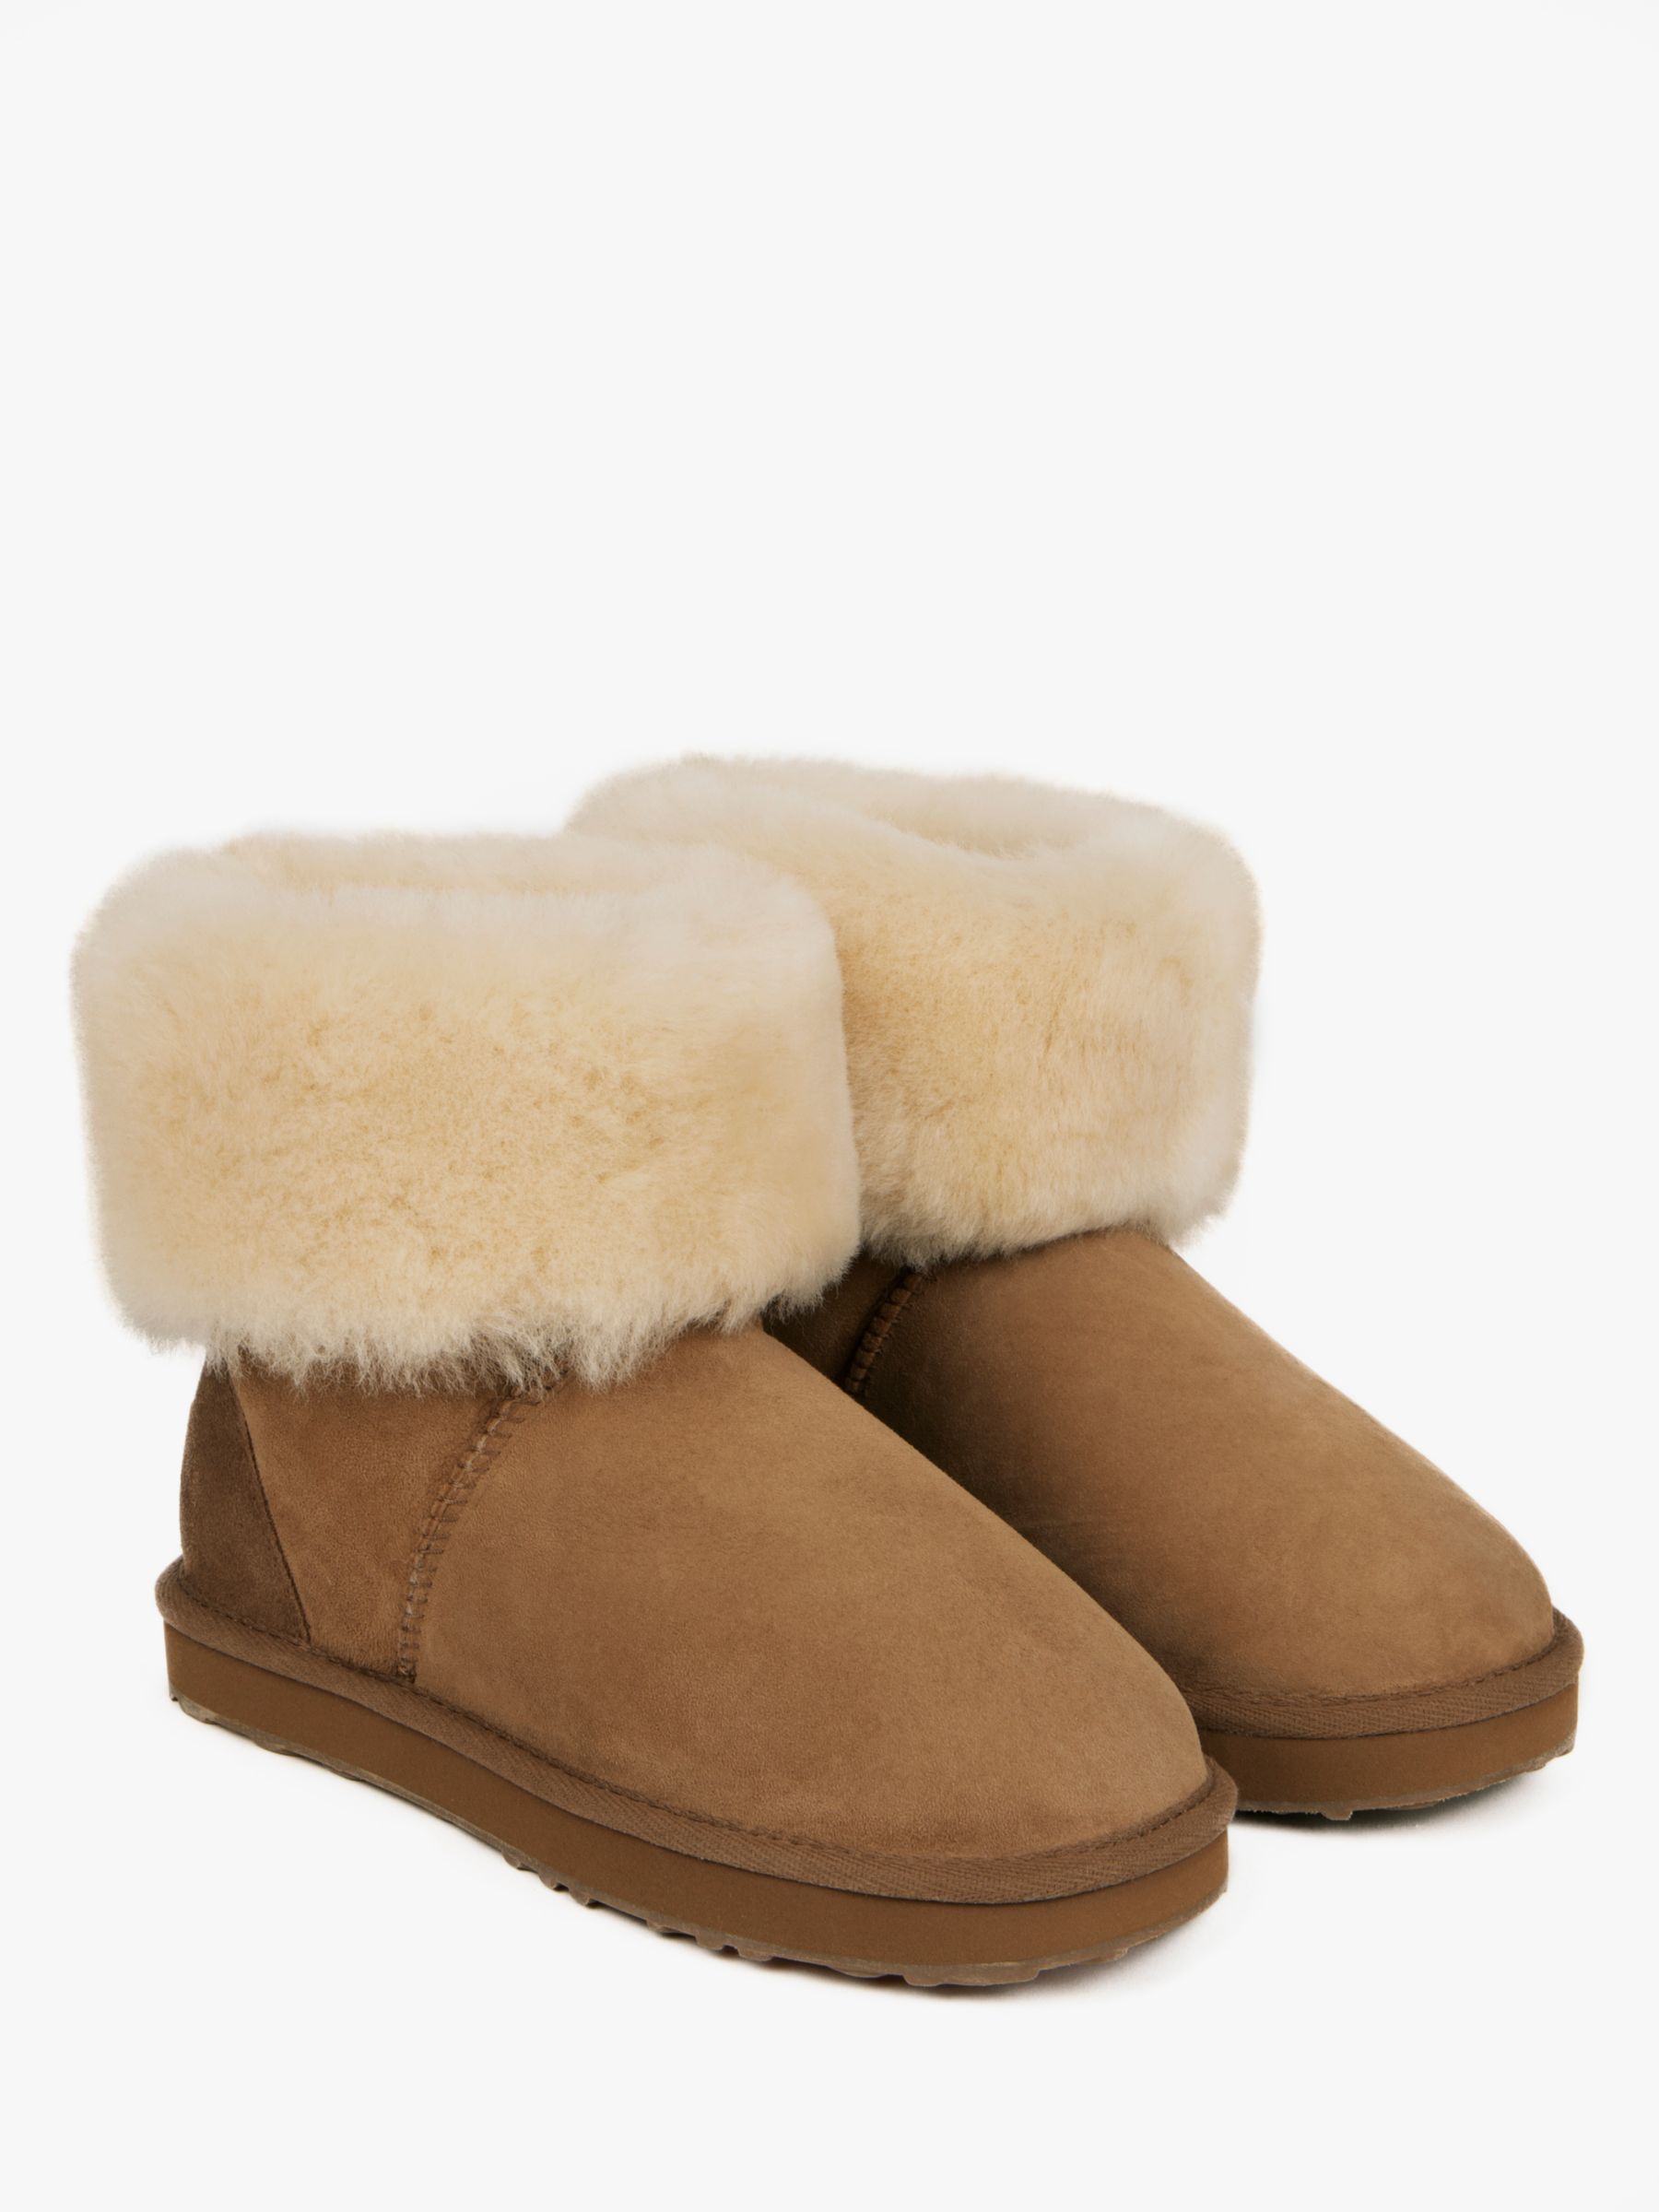 Buy Just Sheepskin Sheepskin Boots Online at johnlewis.com